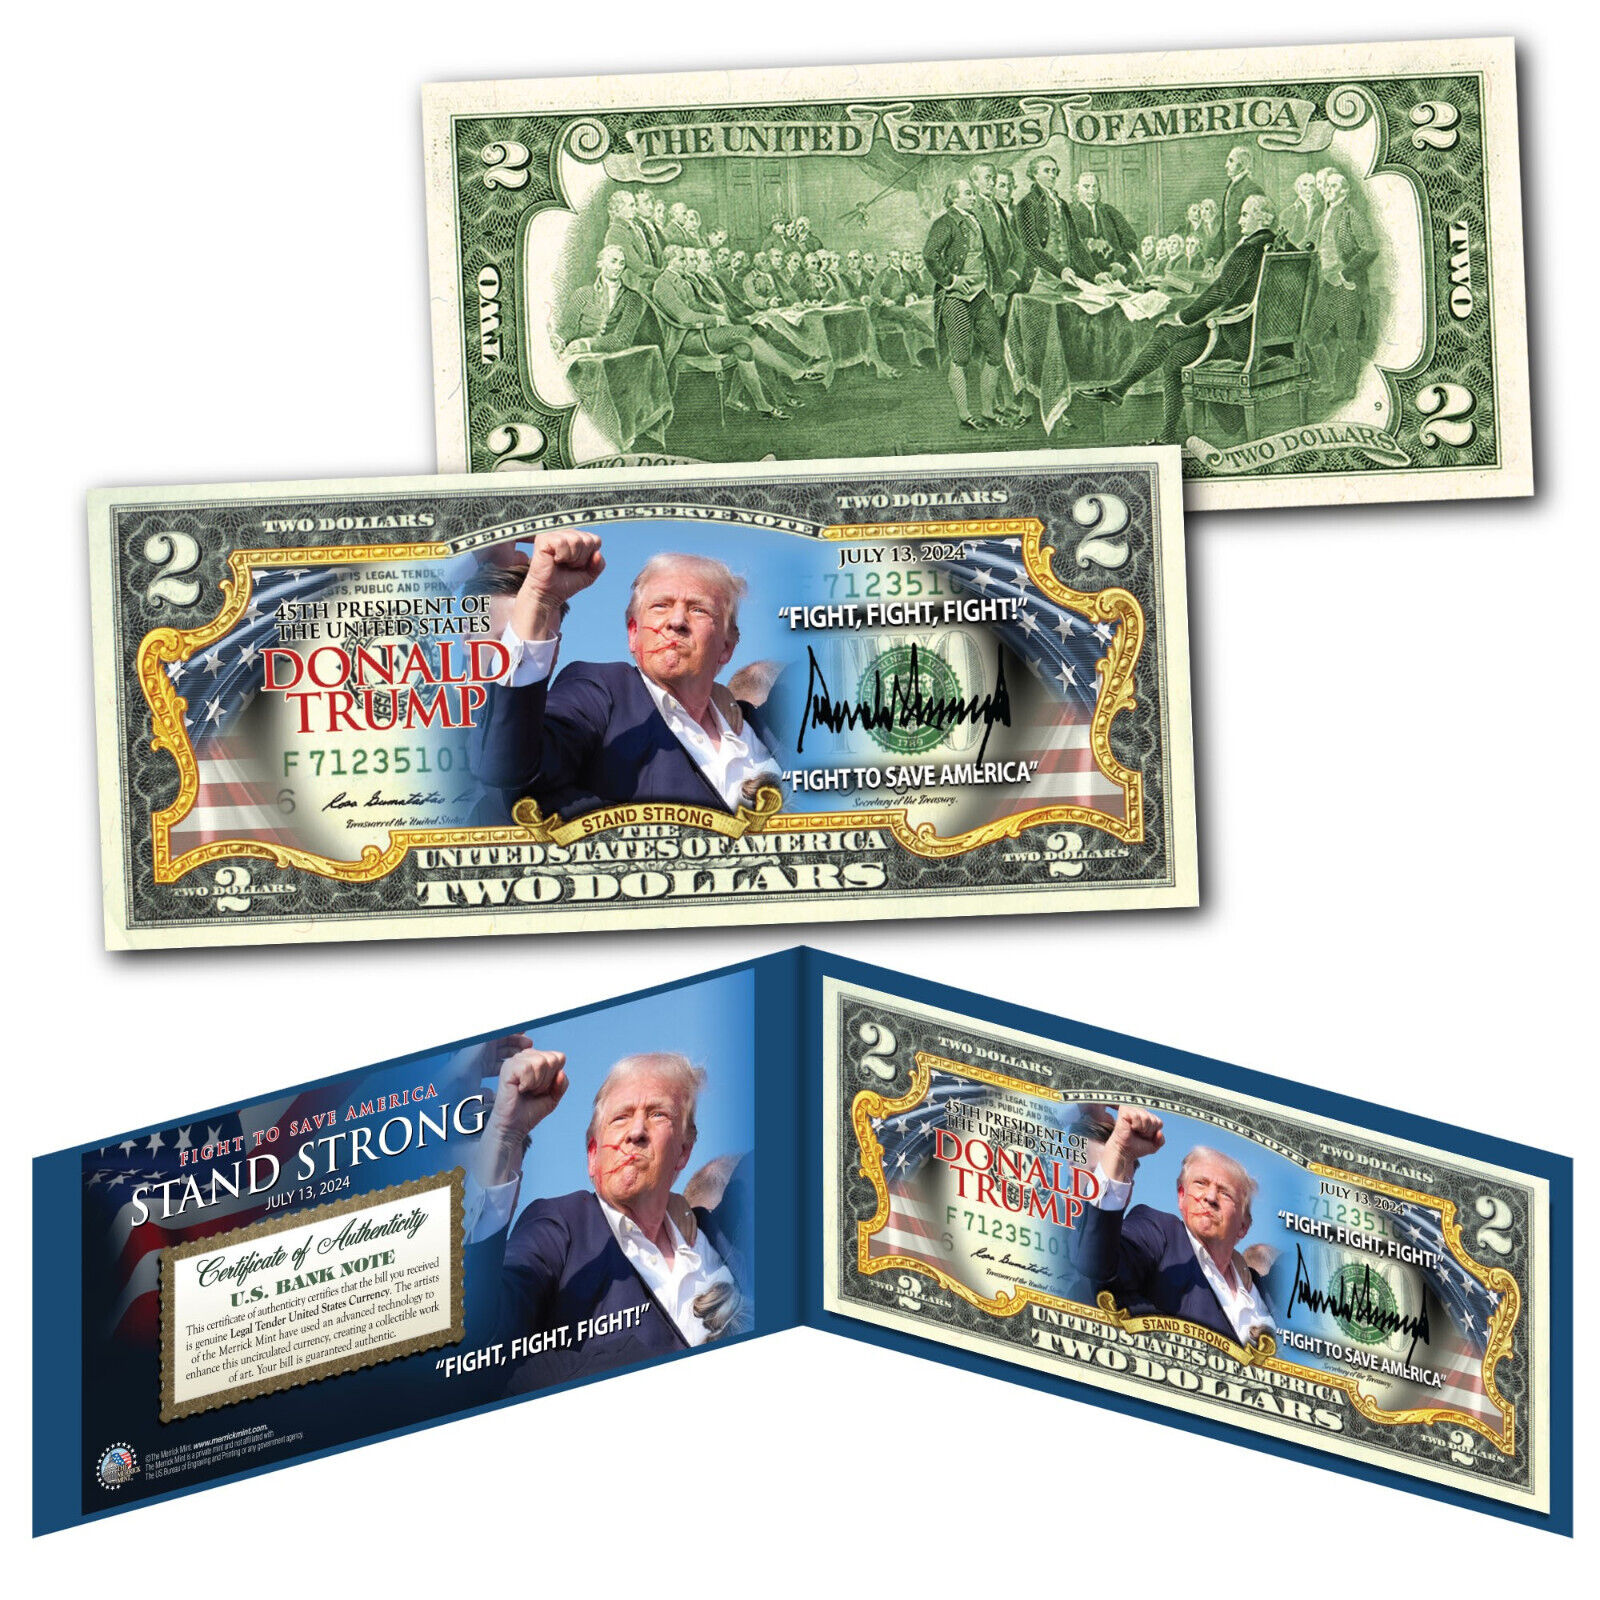 Donald Trump Assassination Attempt Licensed Photo Genuine Color $2 U.S. Bill